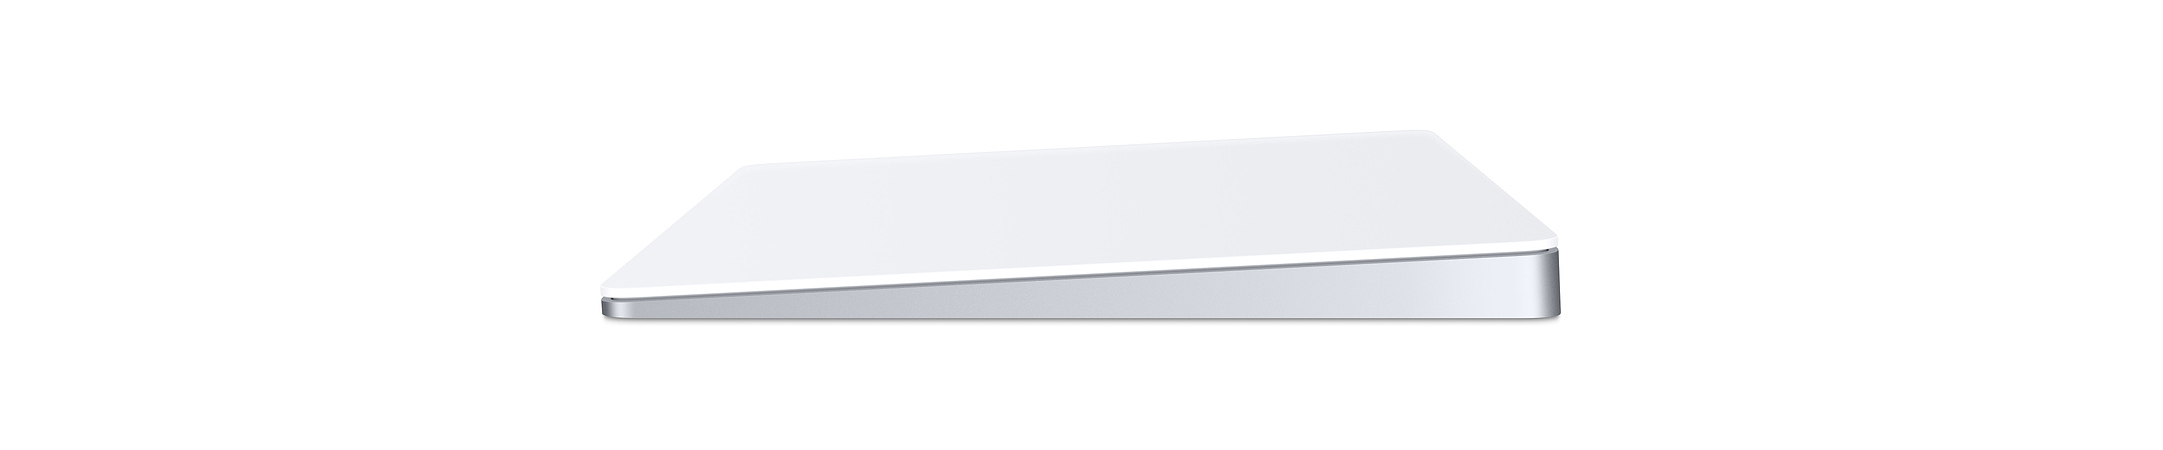 Apple Magic Trackpad 2, Цвет: Silver / Серебристый, изображение 6